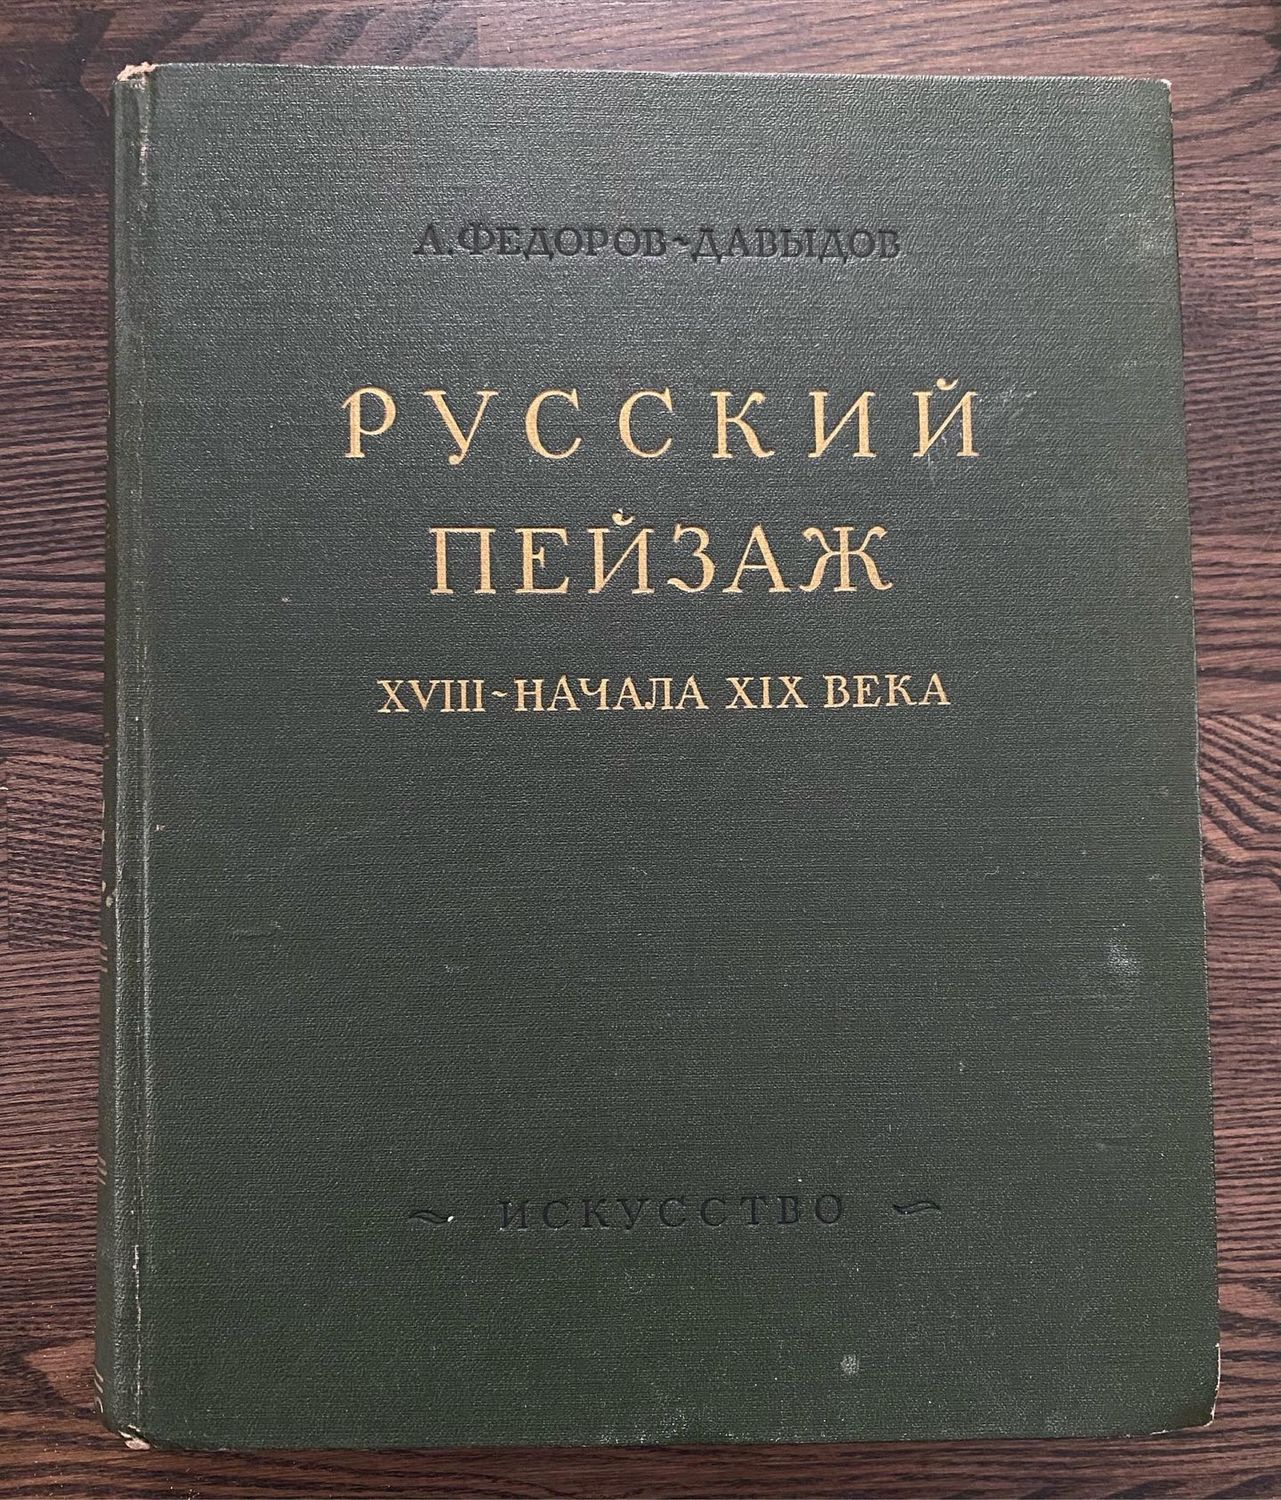 Книга 1953 года